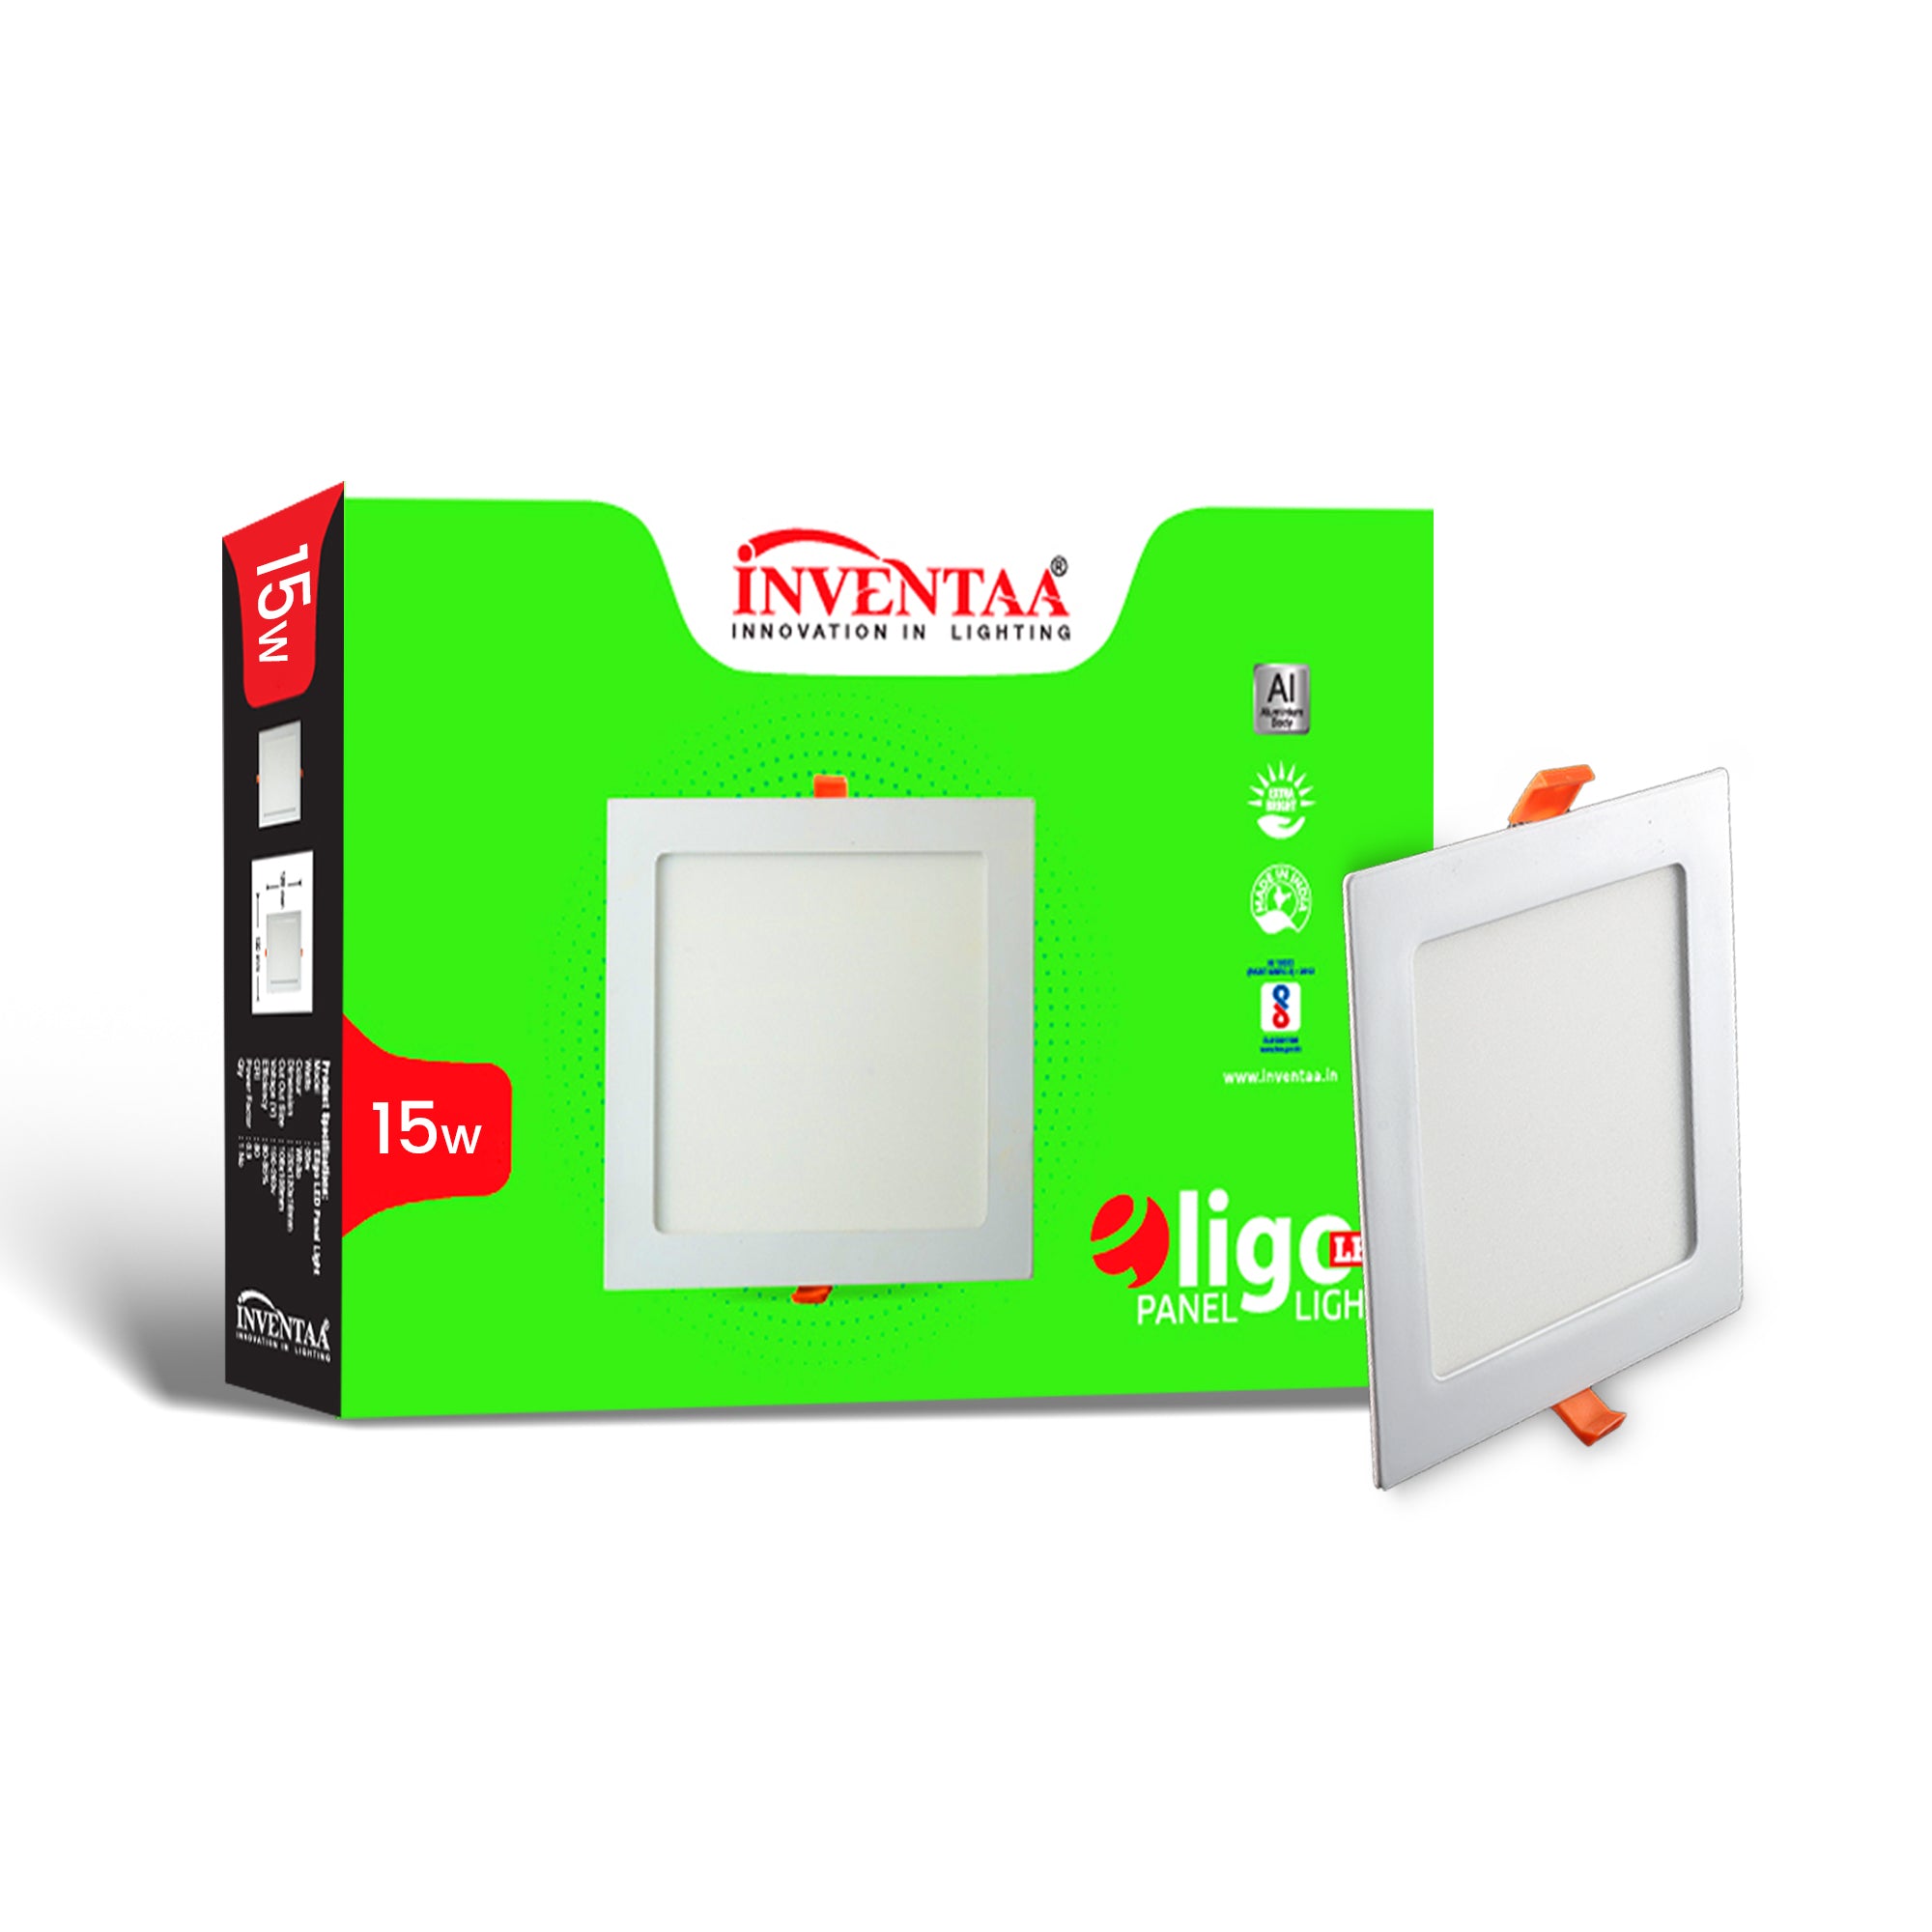 Eligo square 15w led panel light with its box enclosure #watts_15w